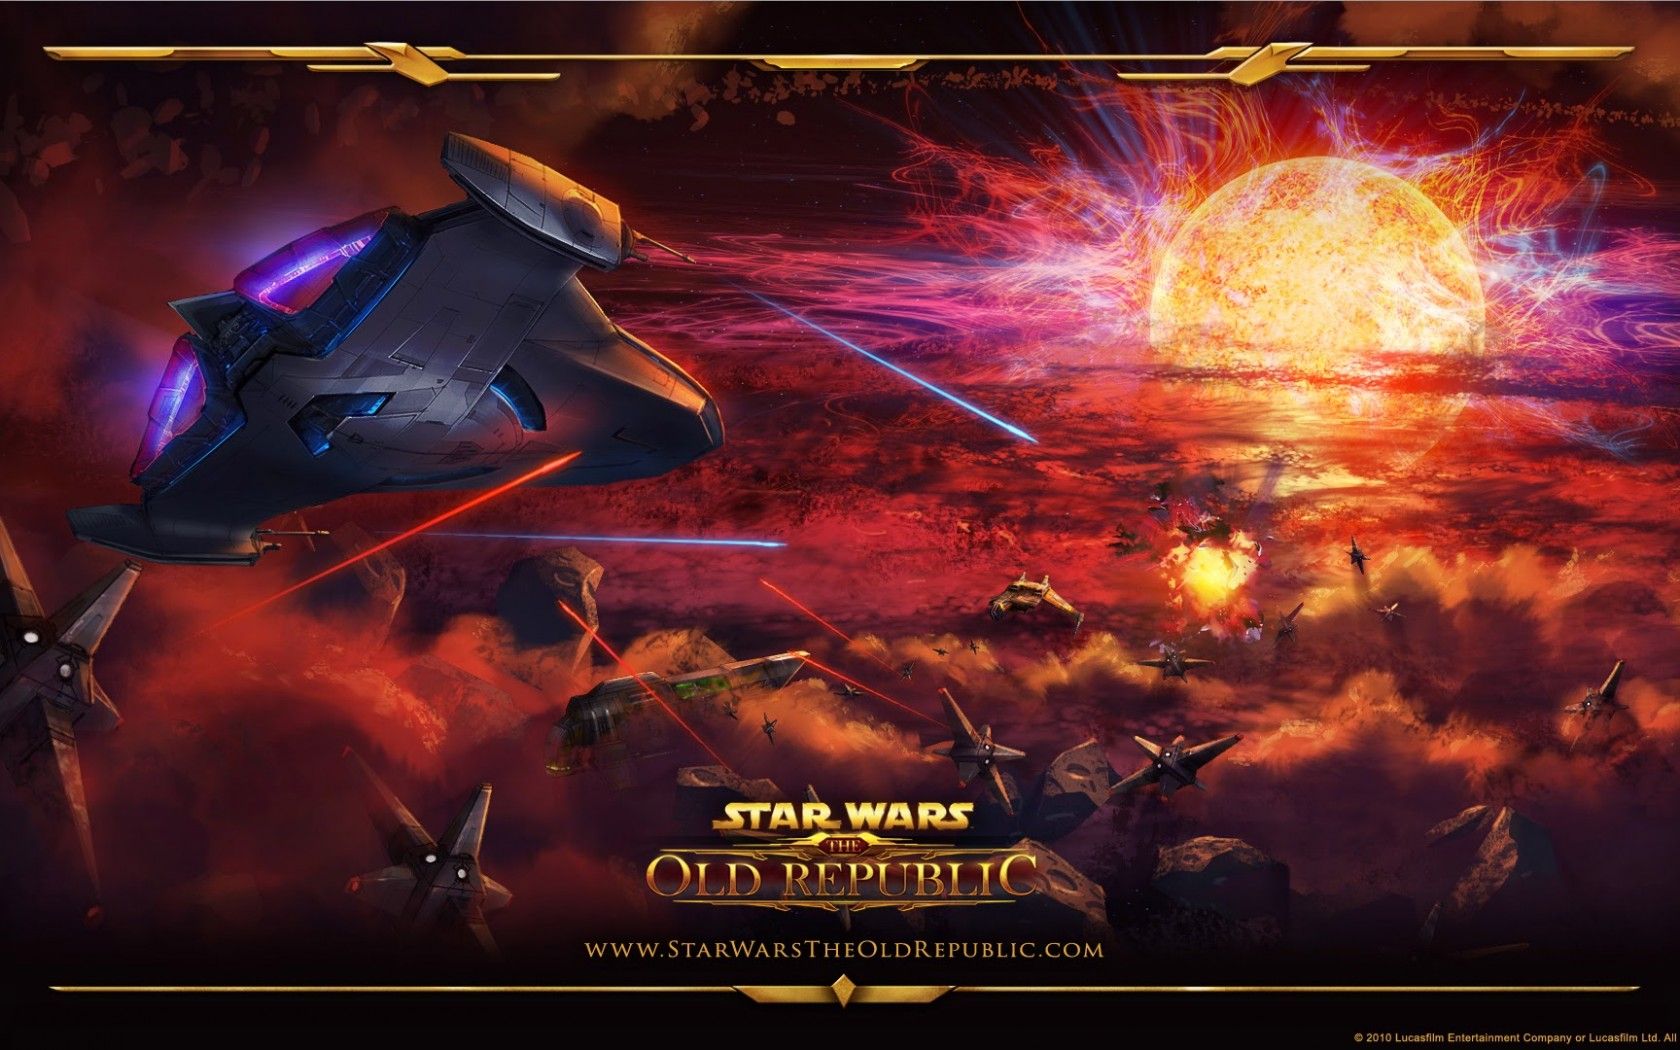 Star Wars The Old Republic Cosmic Battle Wallpaper HD 006, Wallpaper13.com